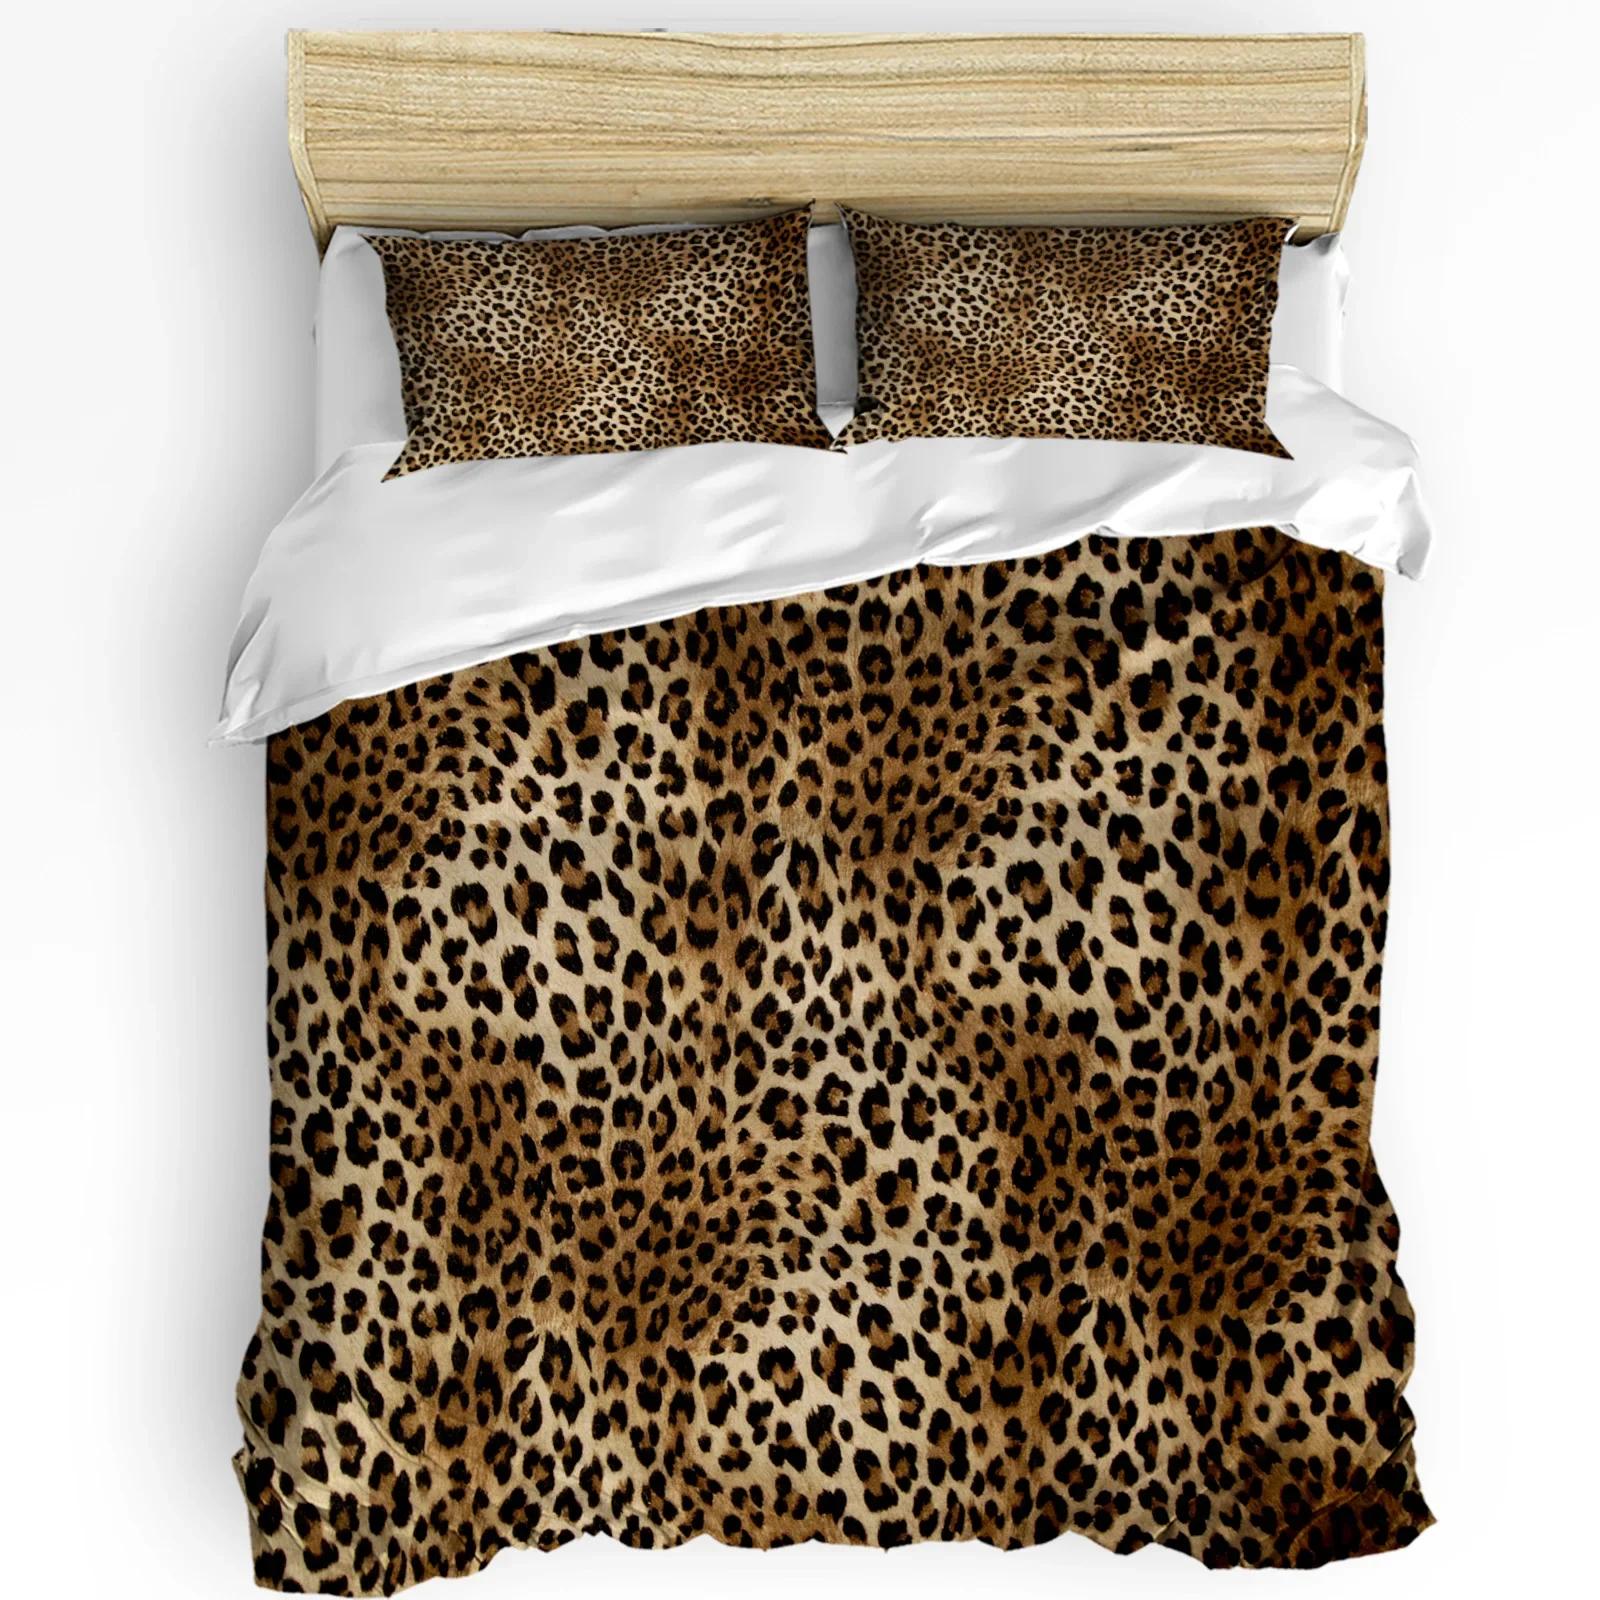 Leopard Print Printed Comfort Duvet Cover Pillow Case Home Textile Quilt Cover Boy Kid Teen Girl Luxury 3pcs Bedding